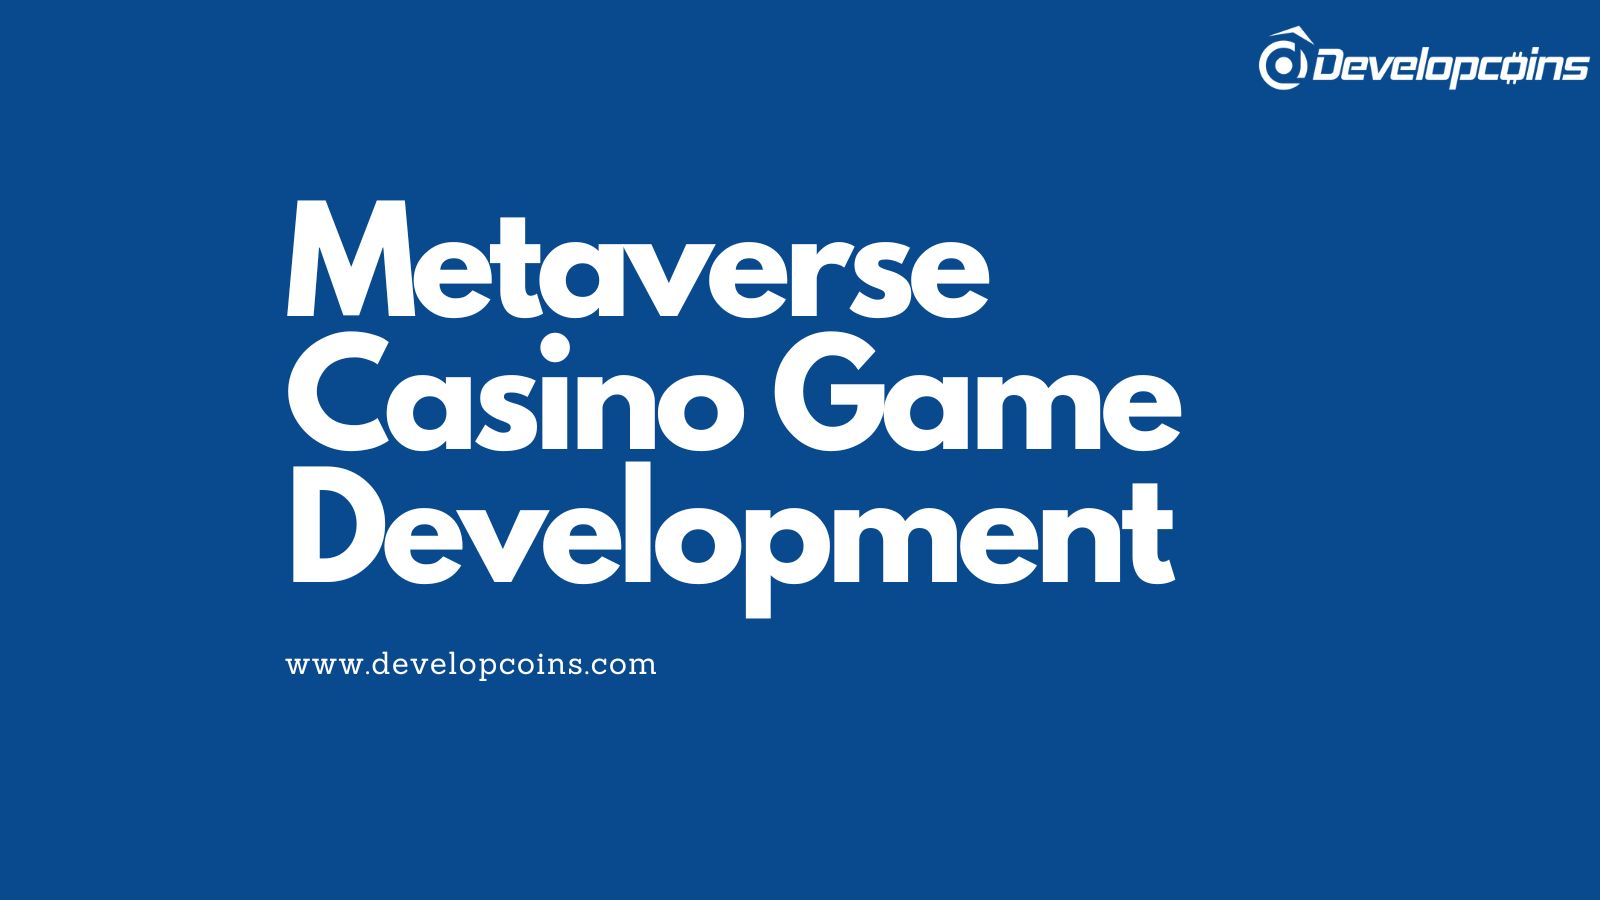 Metaverse Casino Game Development - A Modernized Way To Gamble